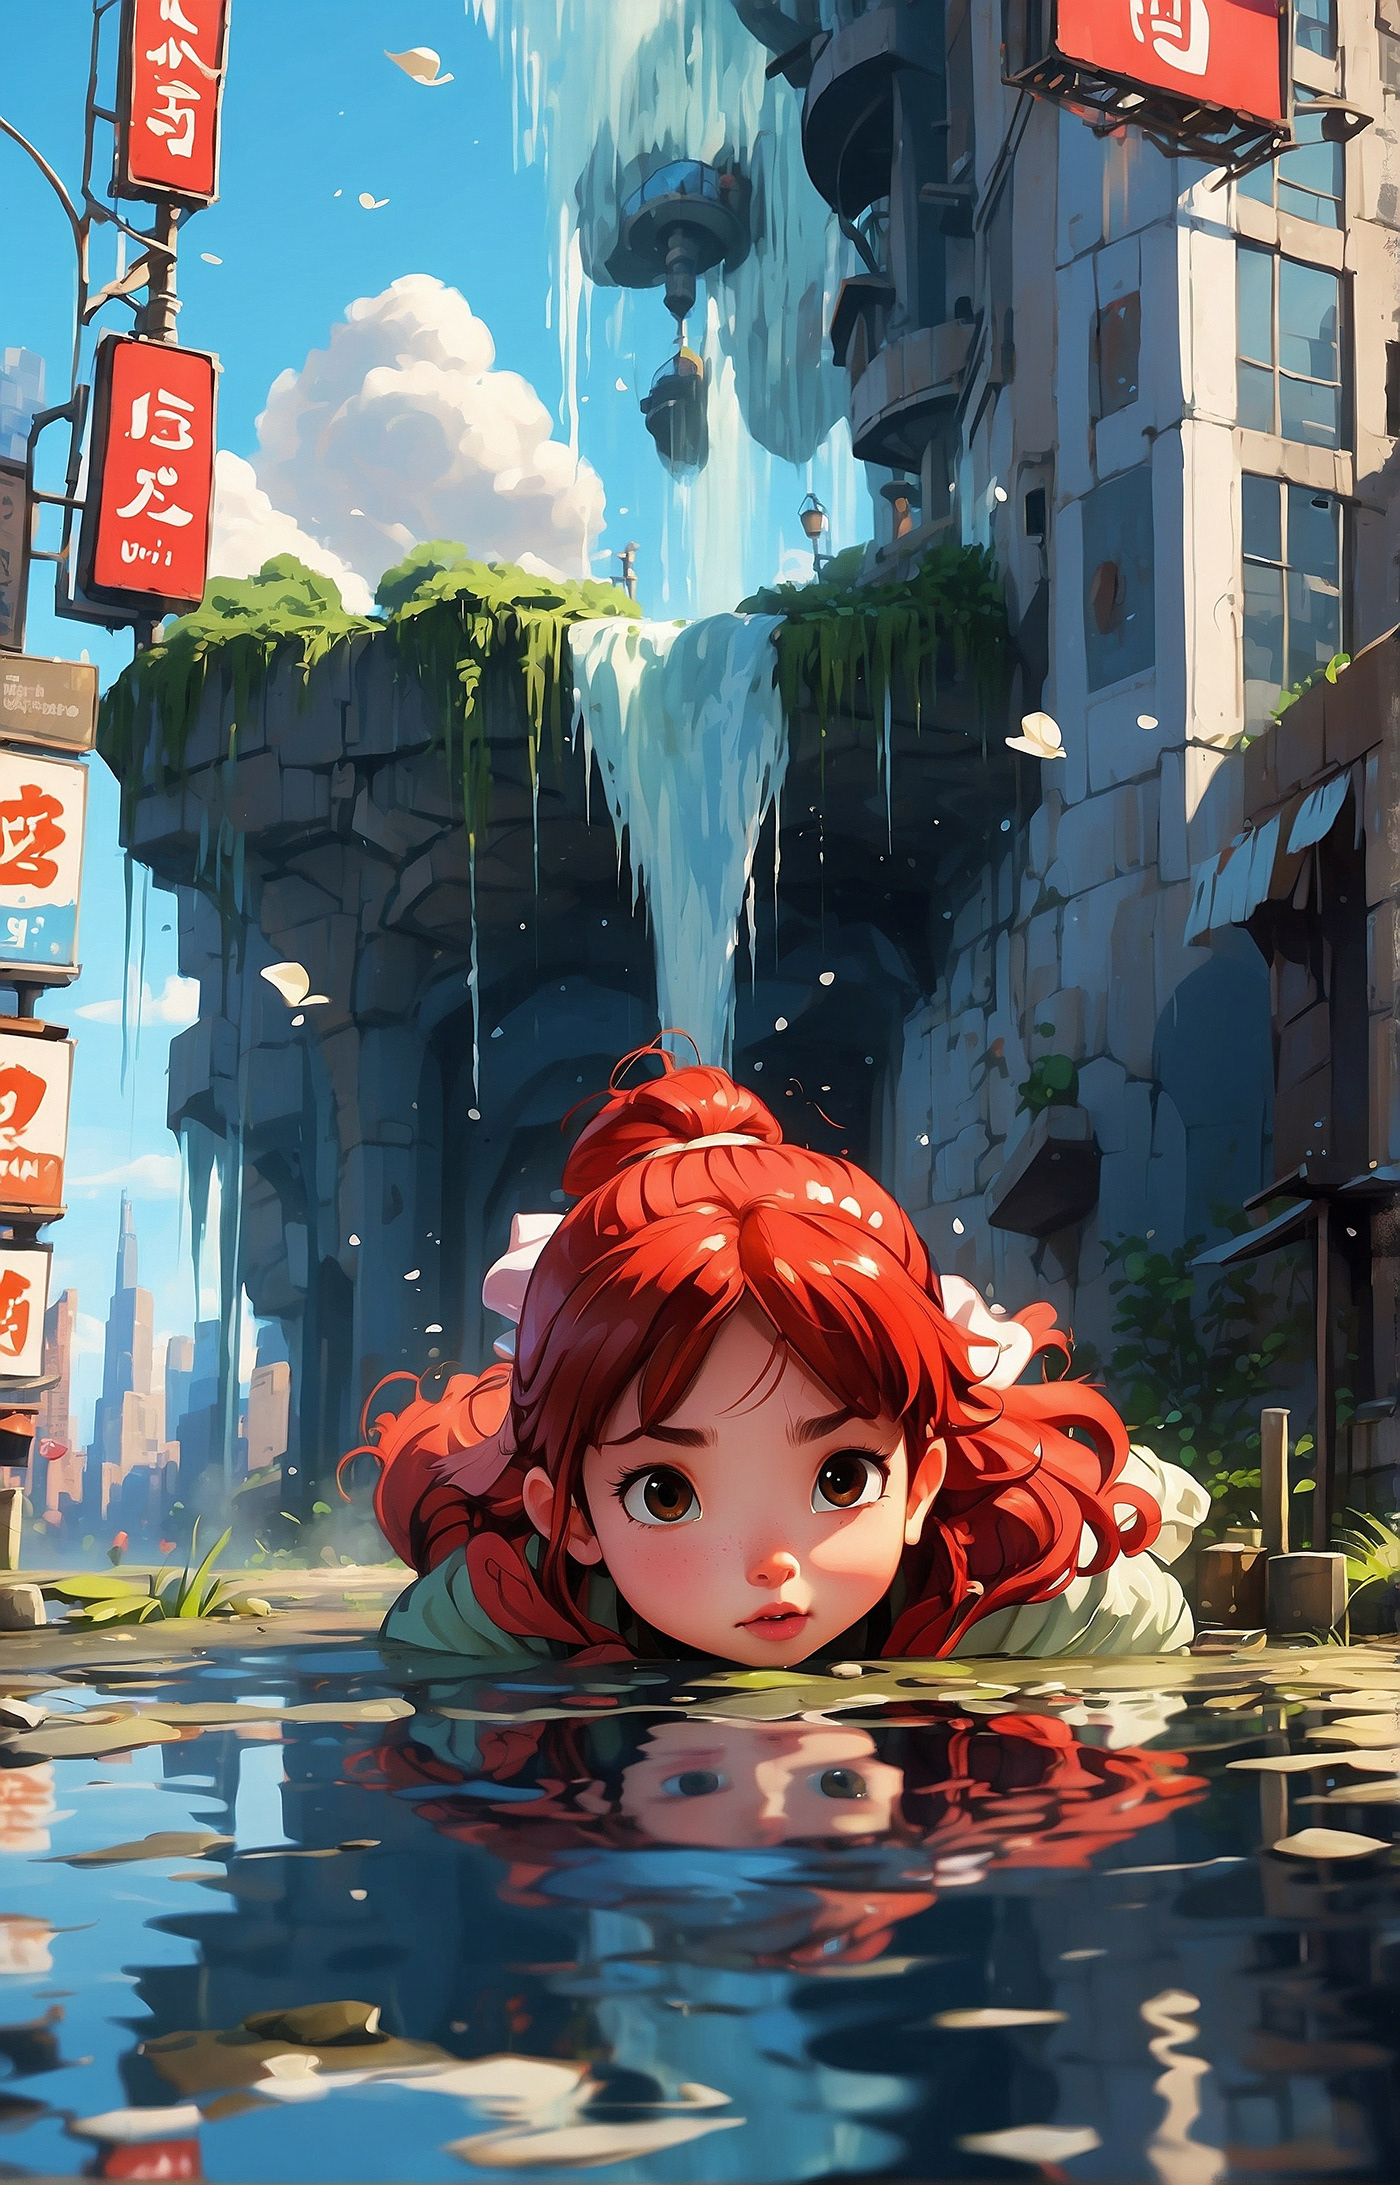 Ghibli studioghibli ponyo chibi anime nautical Moana mermaid fairytale fantasy Ocean sea life creatures wonderful